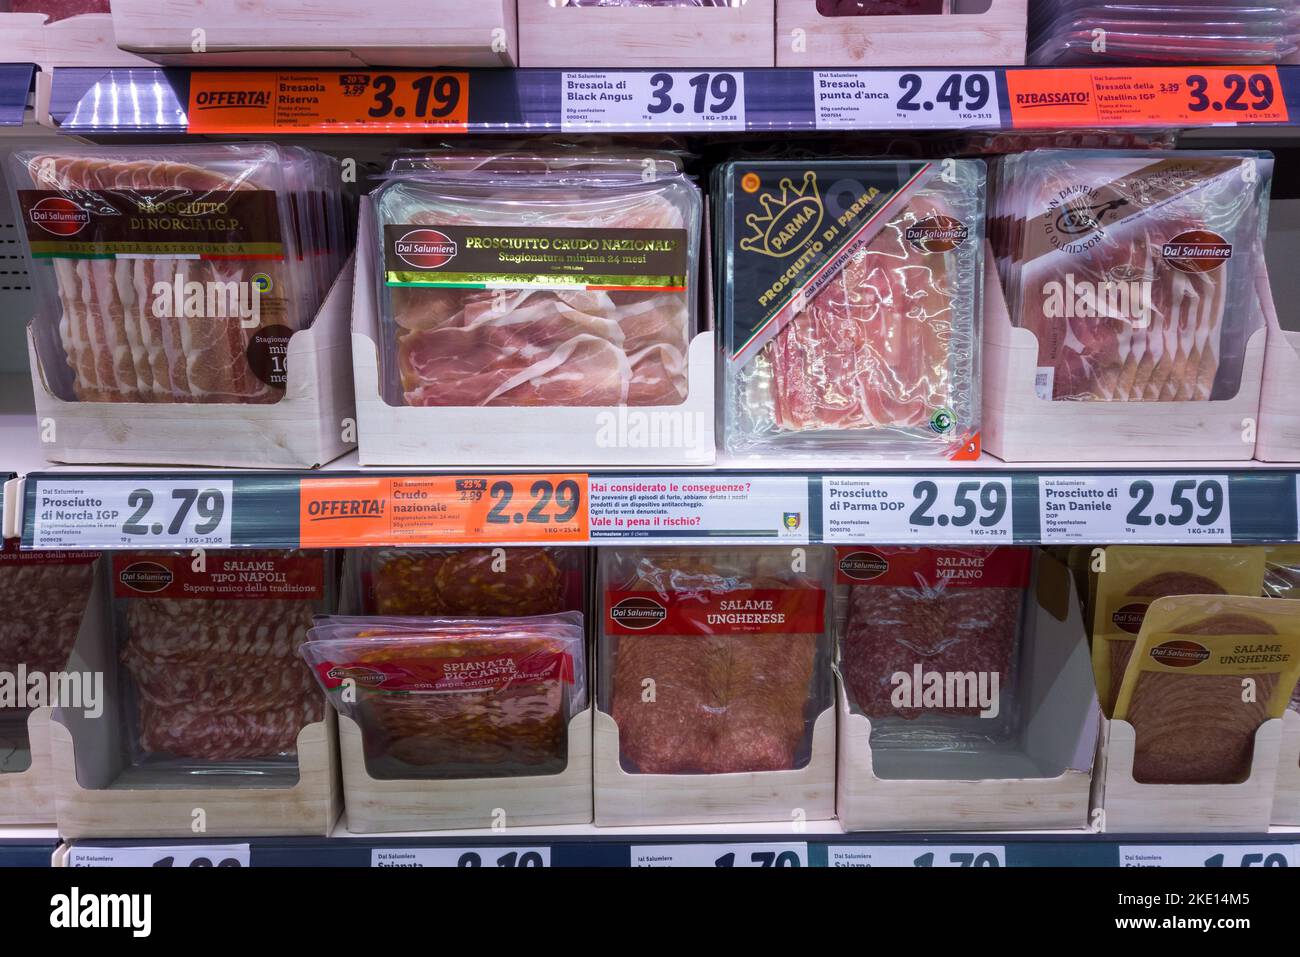 Fossano, Italy - November 09, 2022: Parma ham and salami sliced in transparent plastic packaging in Italian supermarket shelf Stock Photo